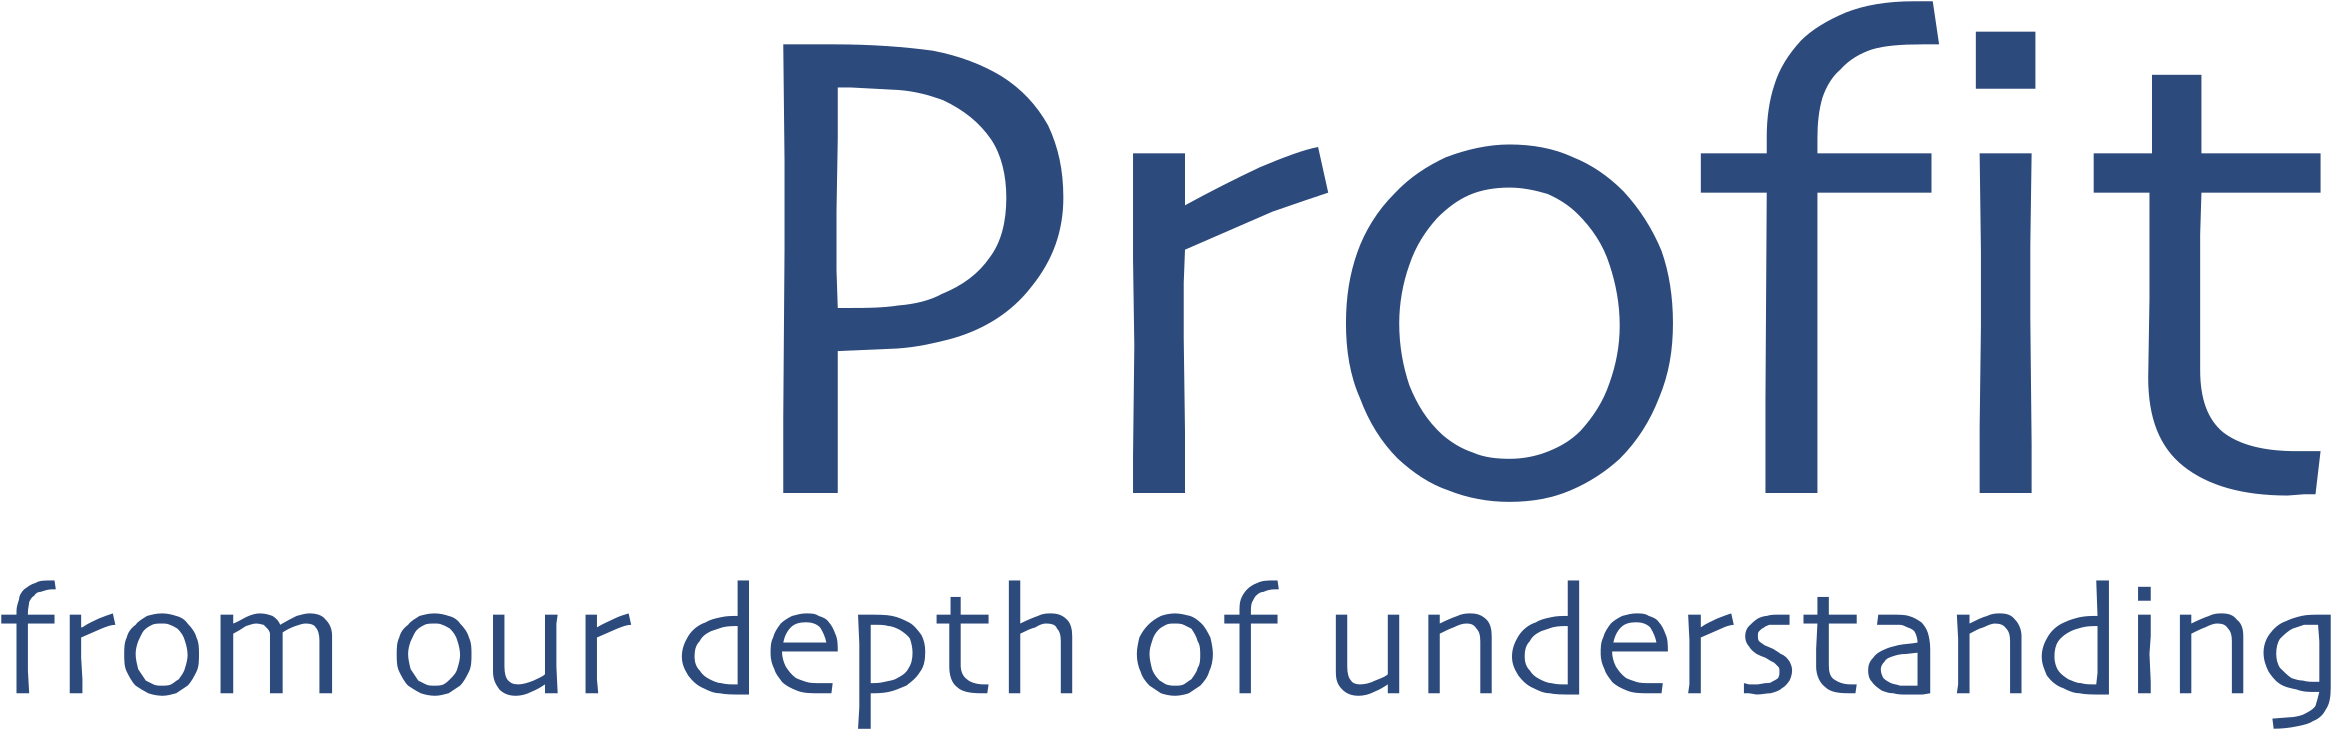 Profit Logo Depthof Understanding PNG image